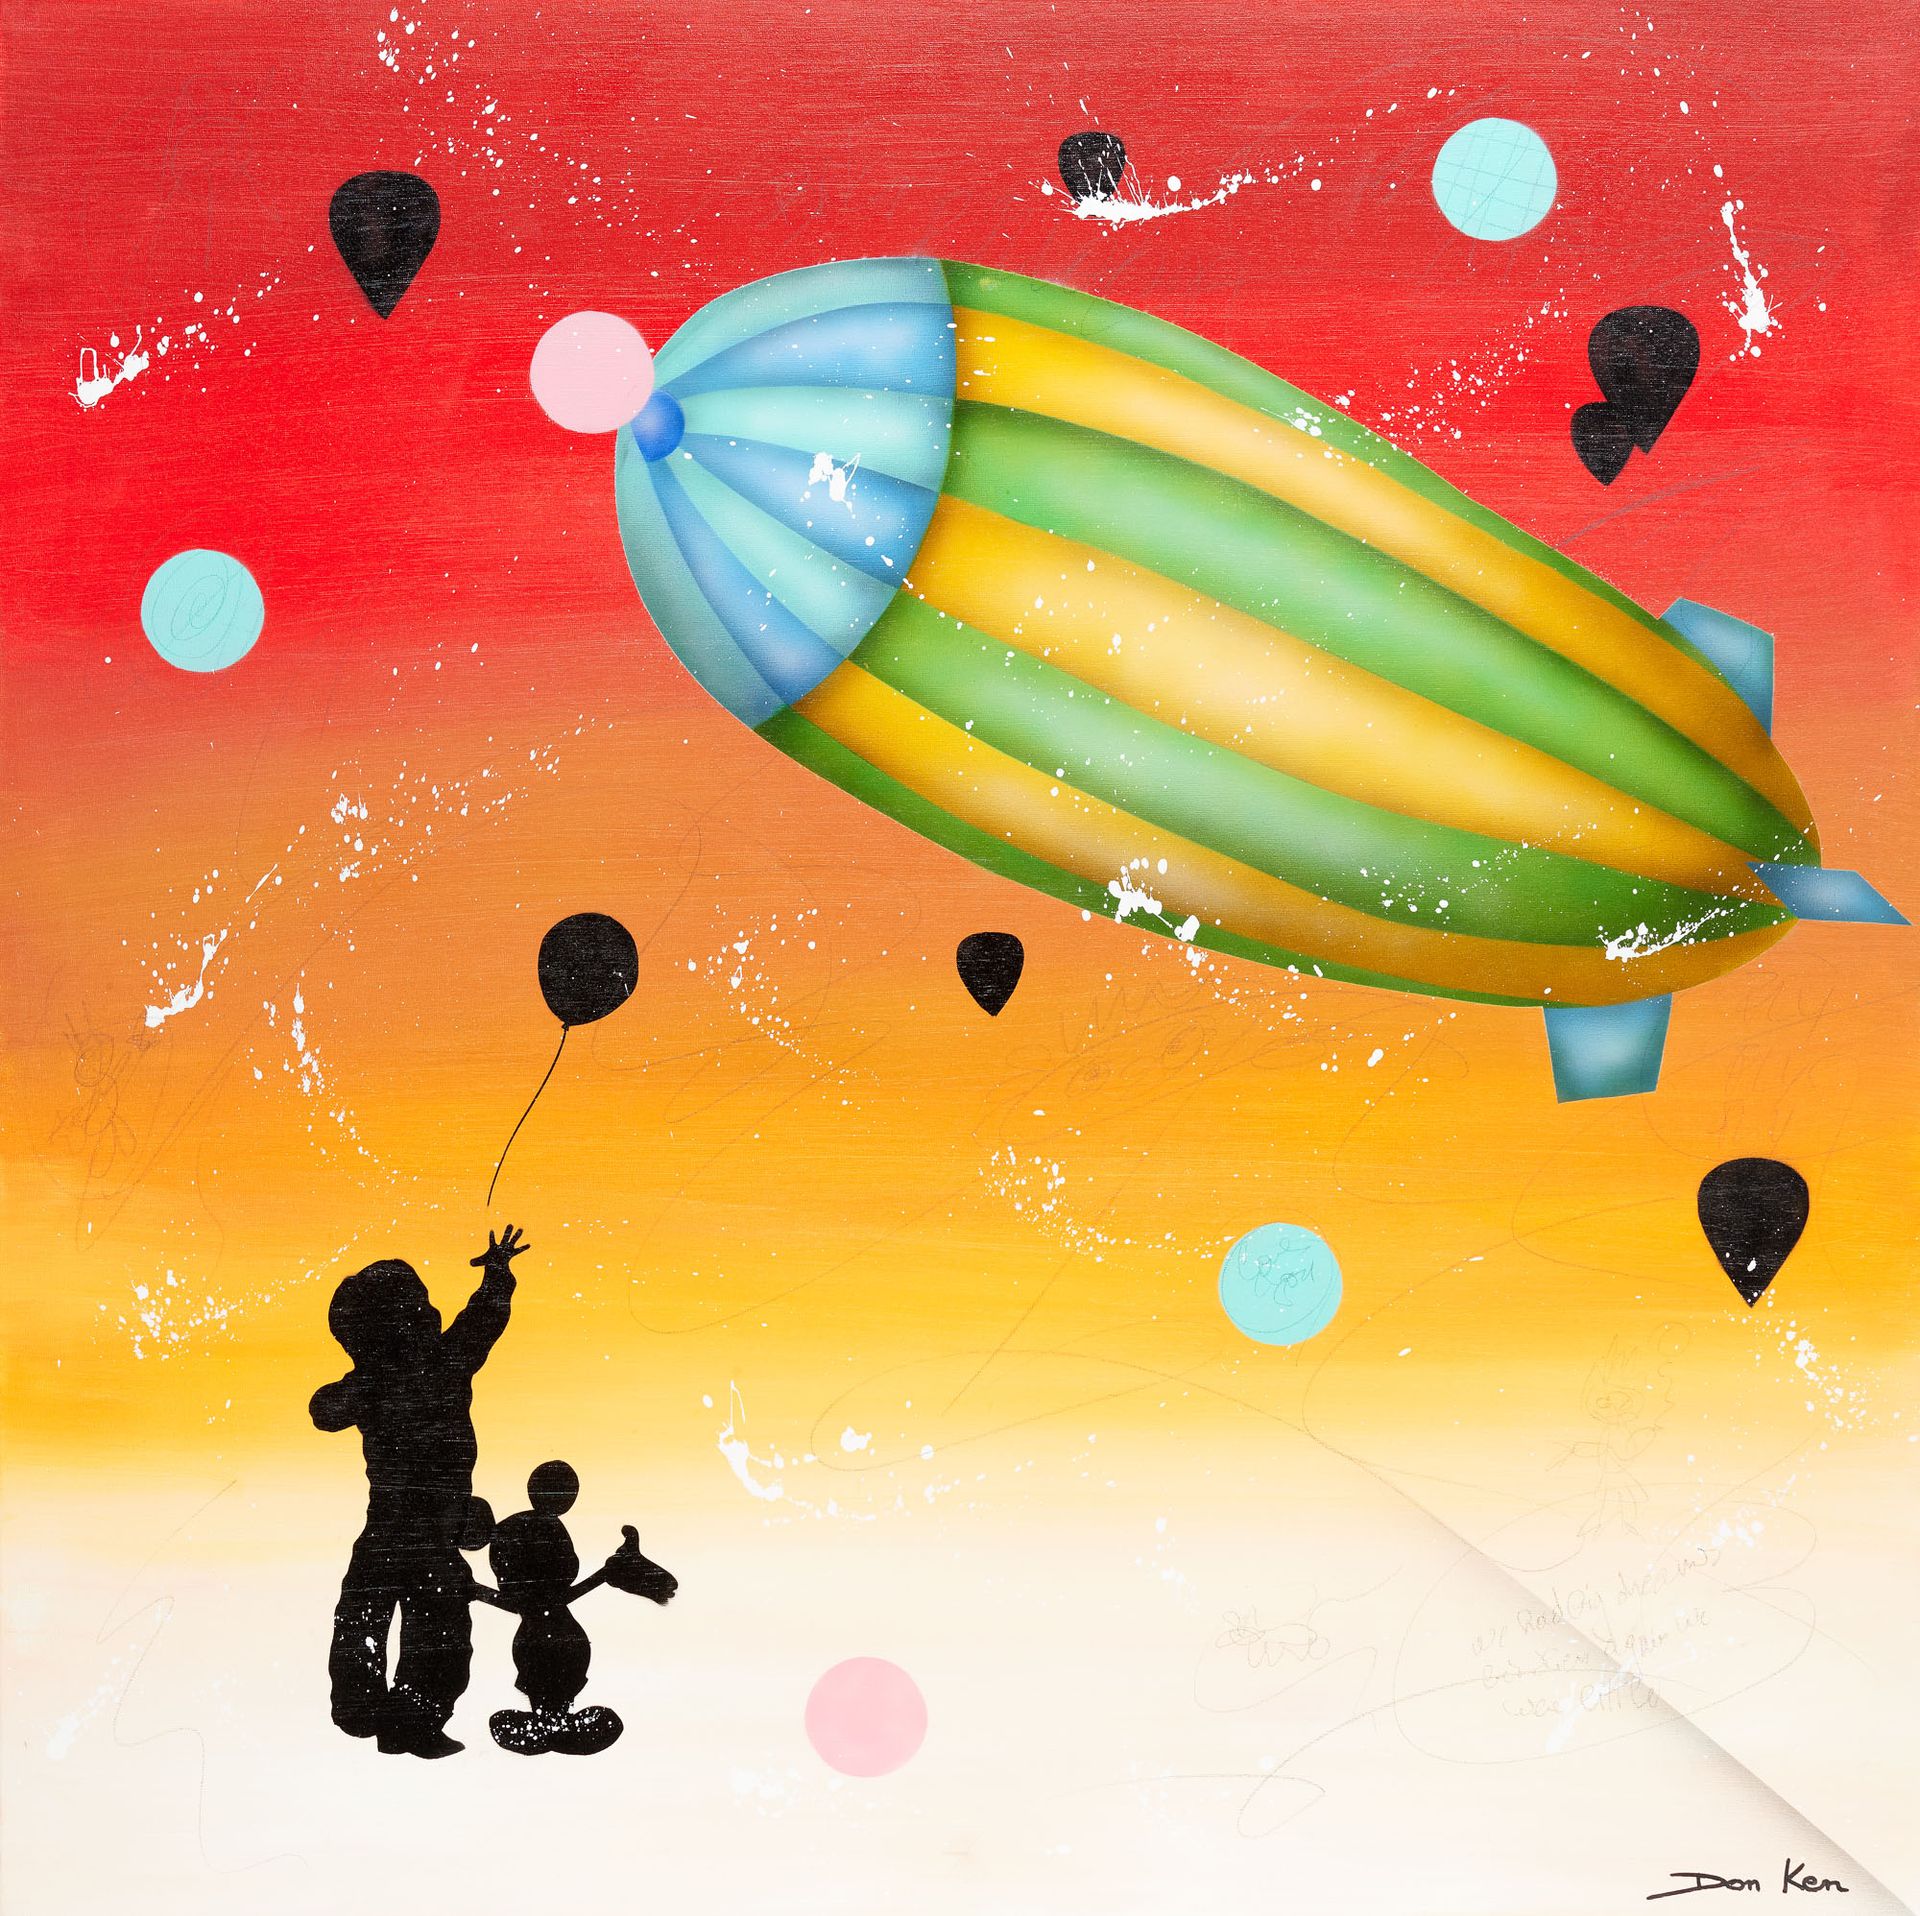 Don KEN École belge (1956) Acryl auf Leinwand: "Big baloon".

Betitelt und signi&hellip;